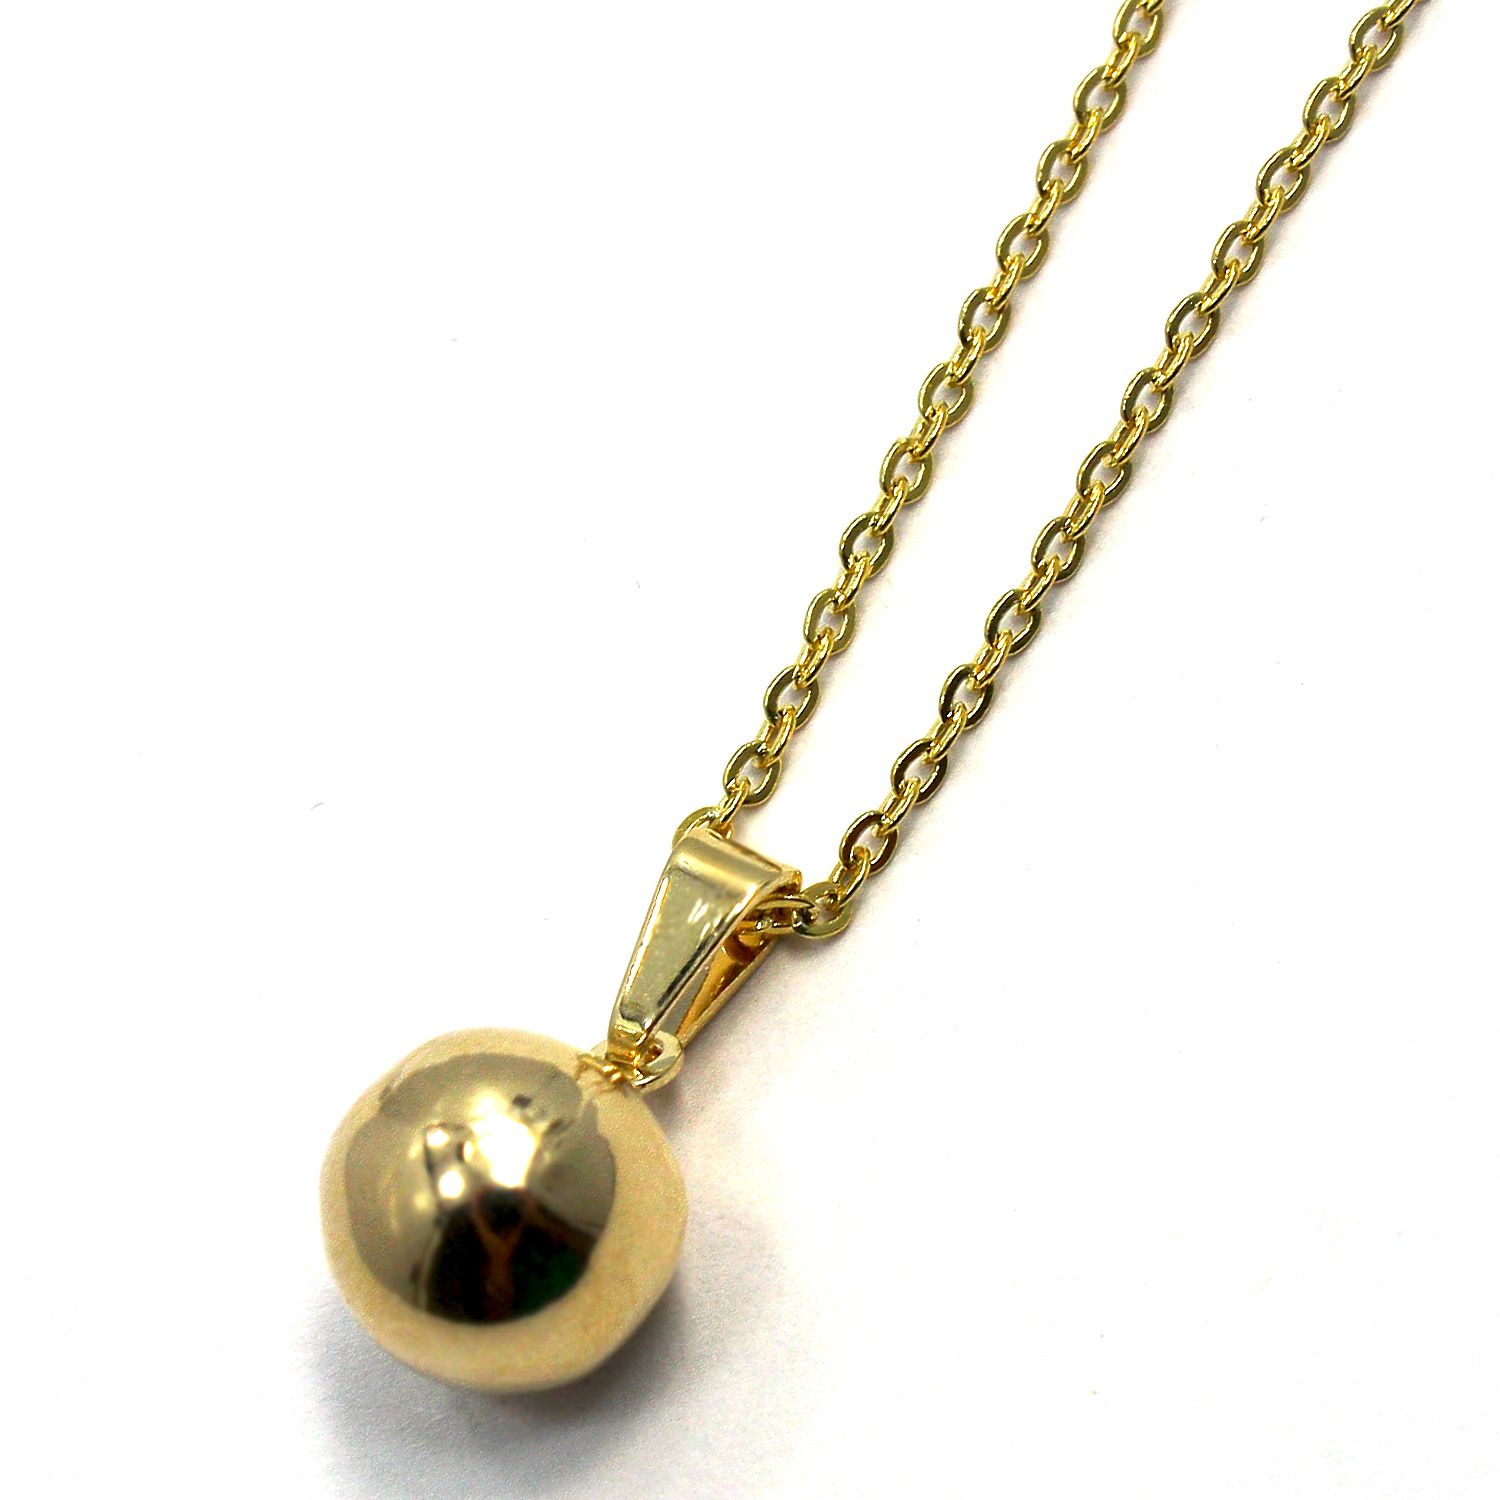   18k GF Ball Necklace Pendant 9mm Plain Charm Round Pendant Lady Girl